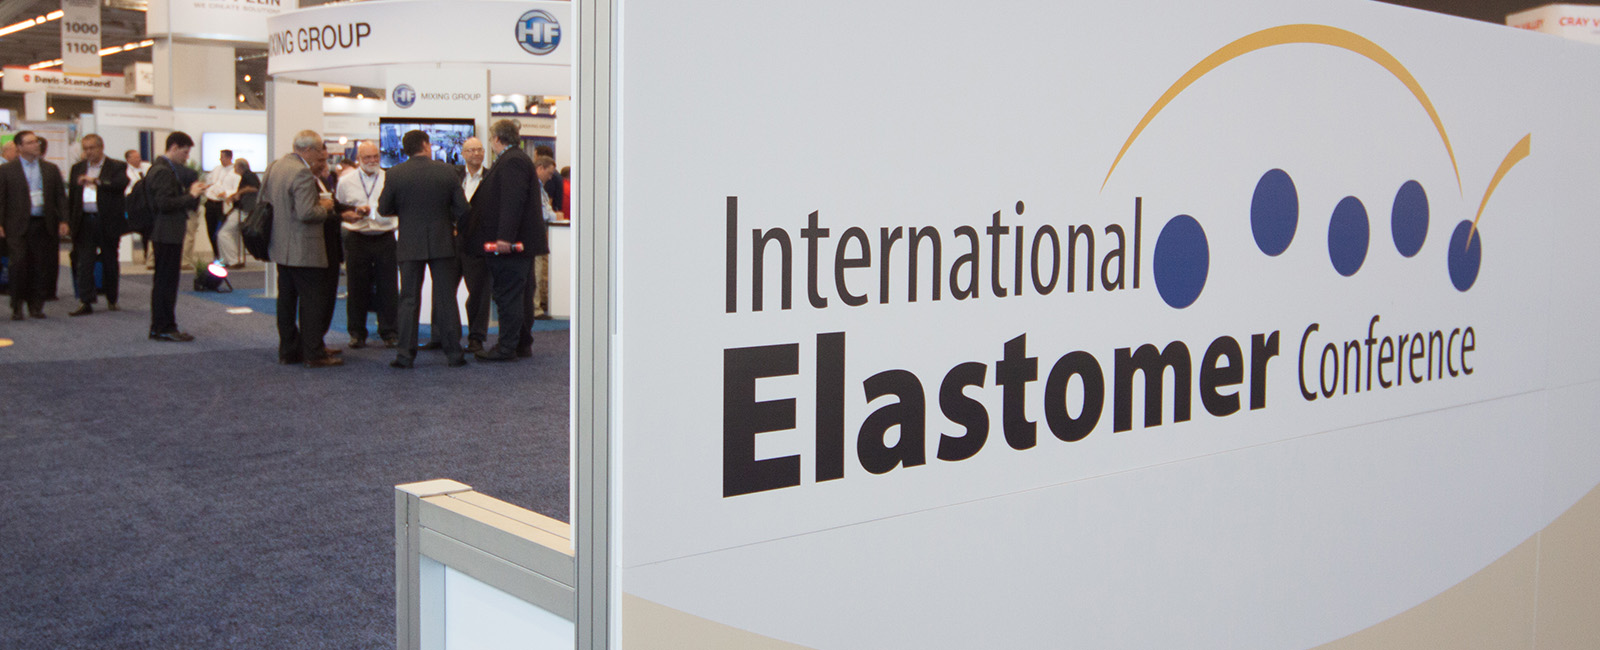 Conference attendees gathering at booths behind International Elastomer Conference indoor floor signage